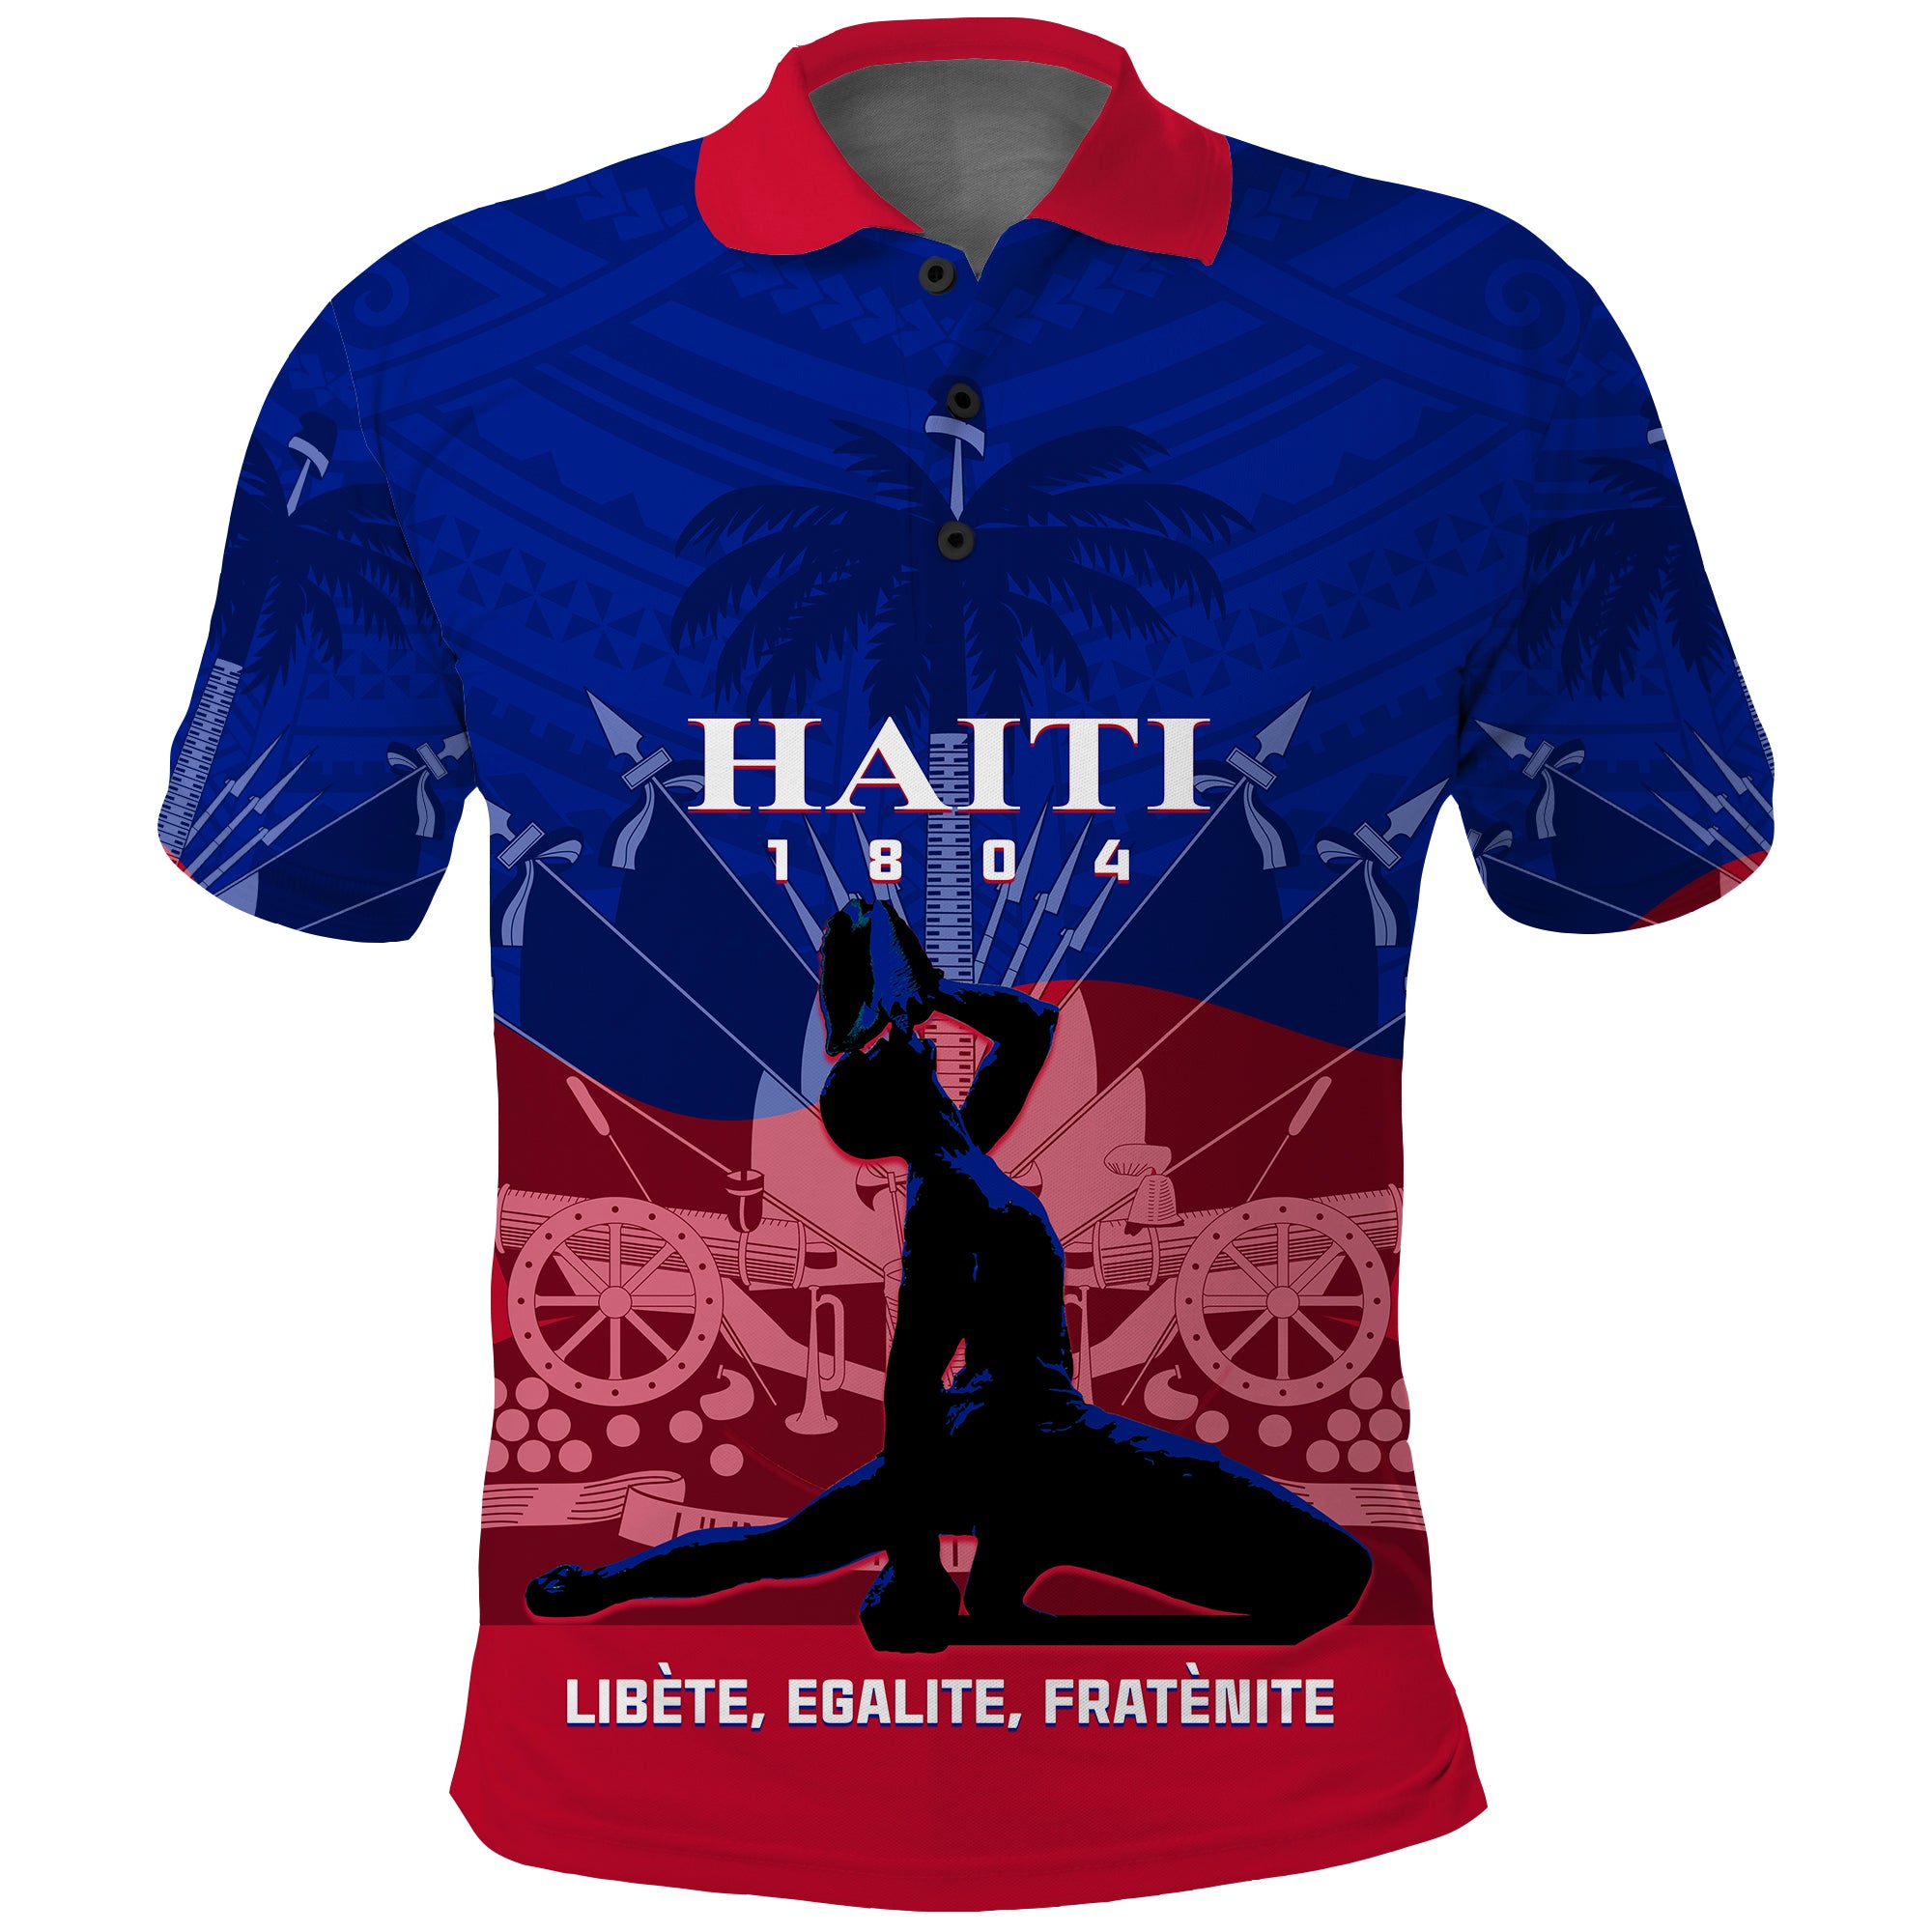 Haiti Polo Shirt Negre Marron With Coat Of Arms Polynesian Style LT14